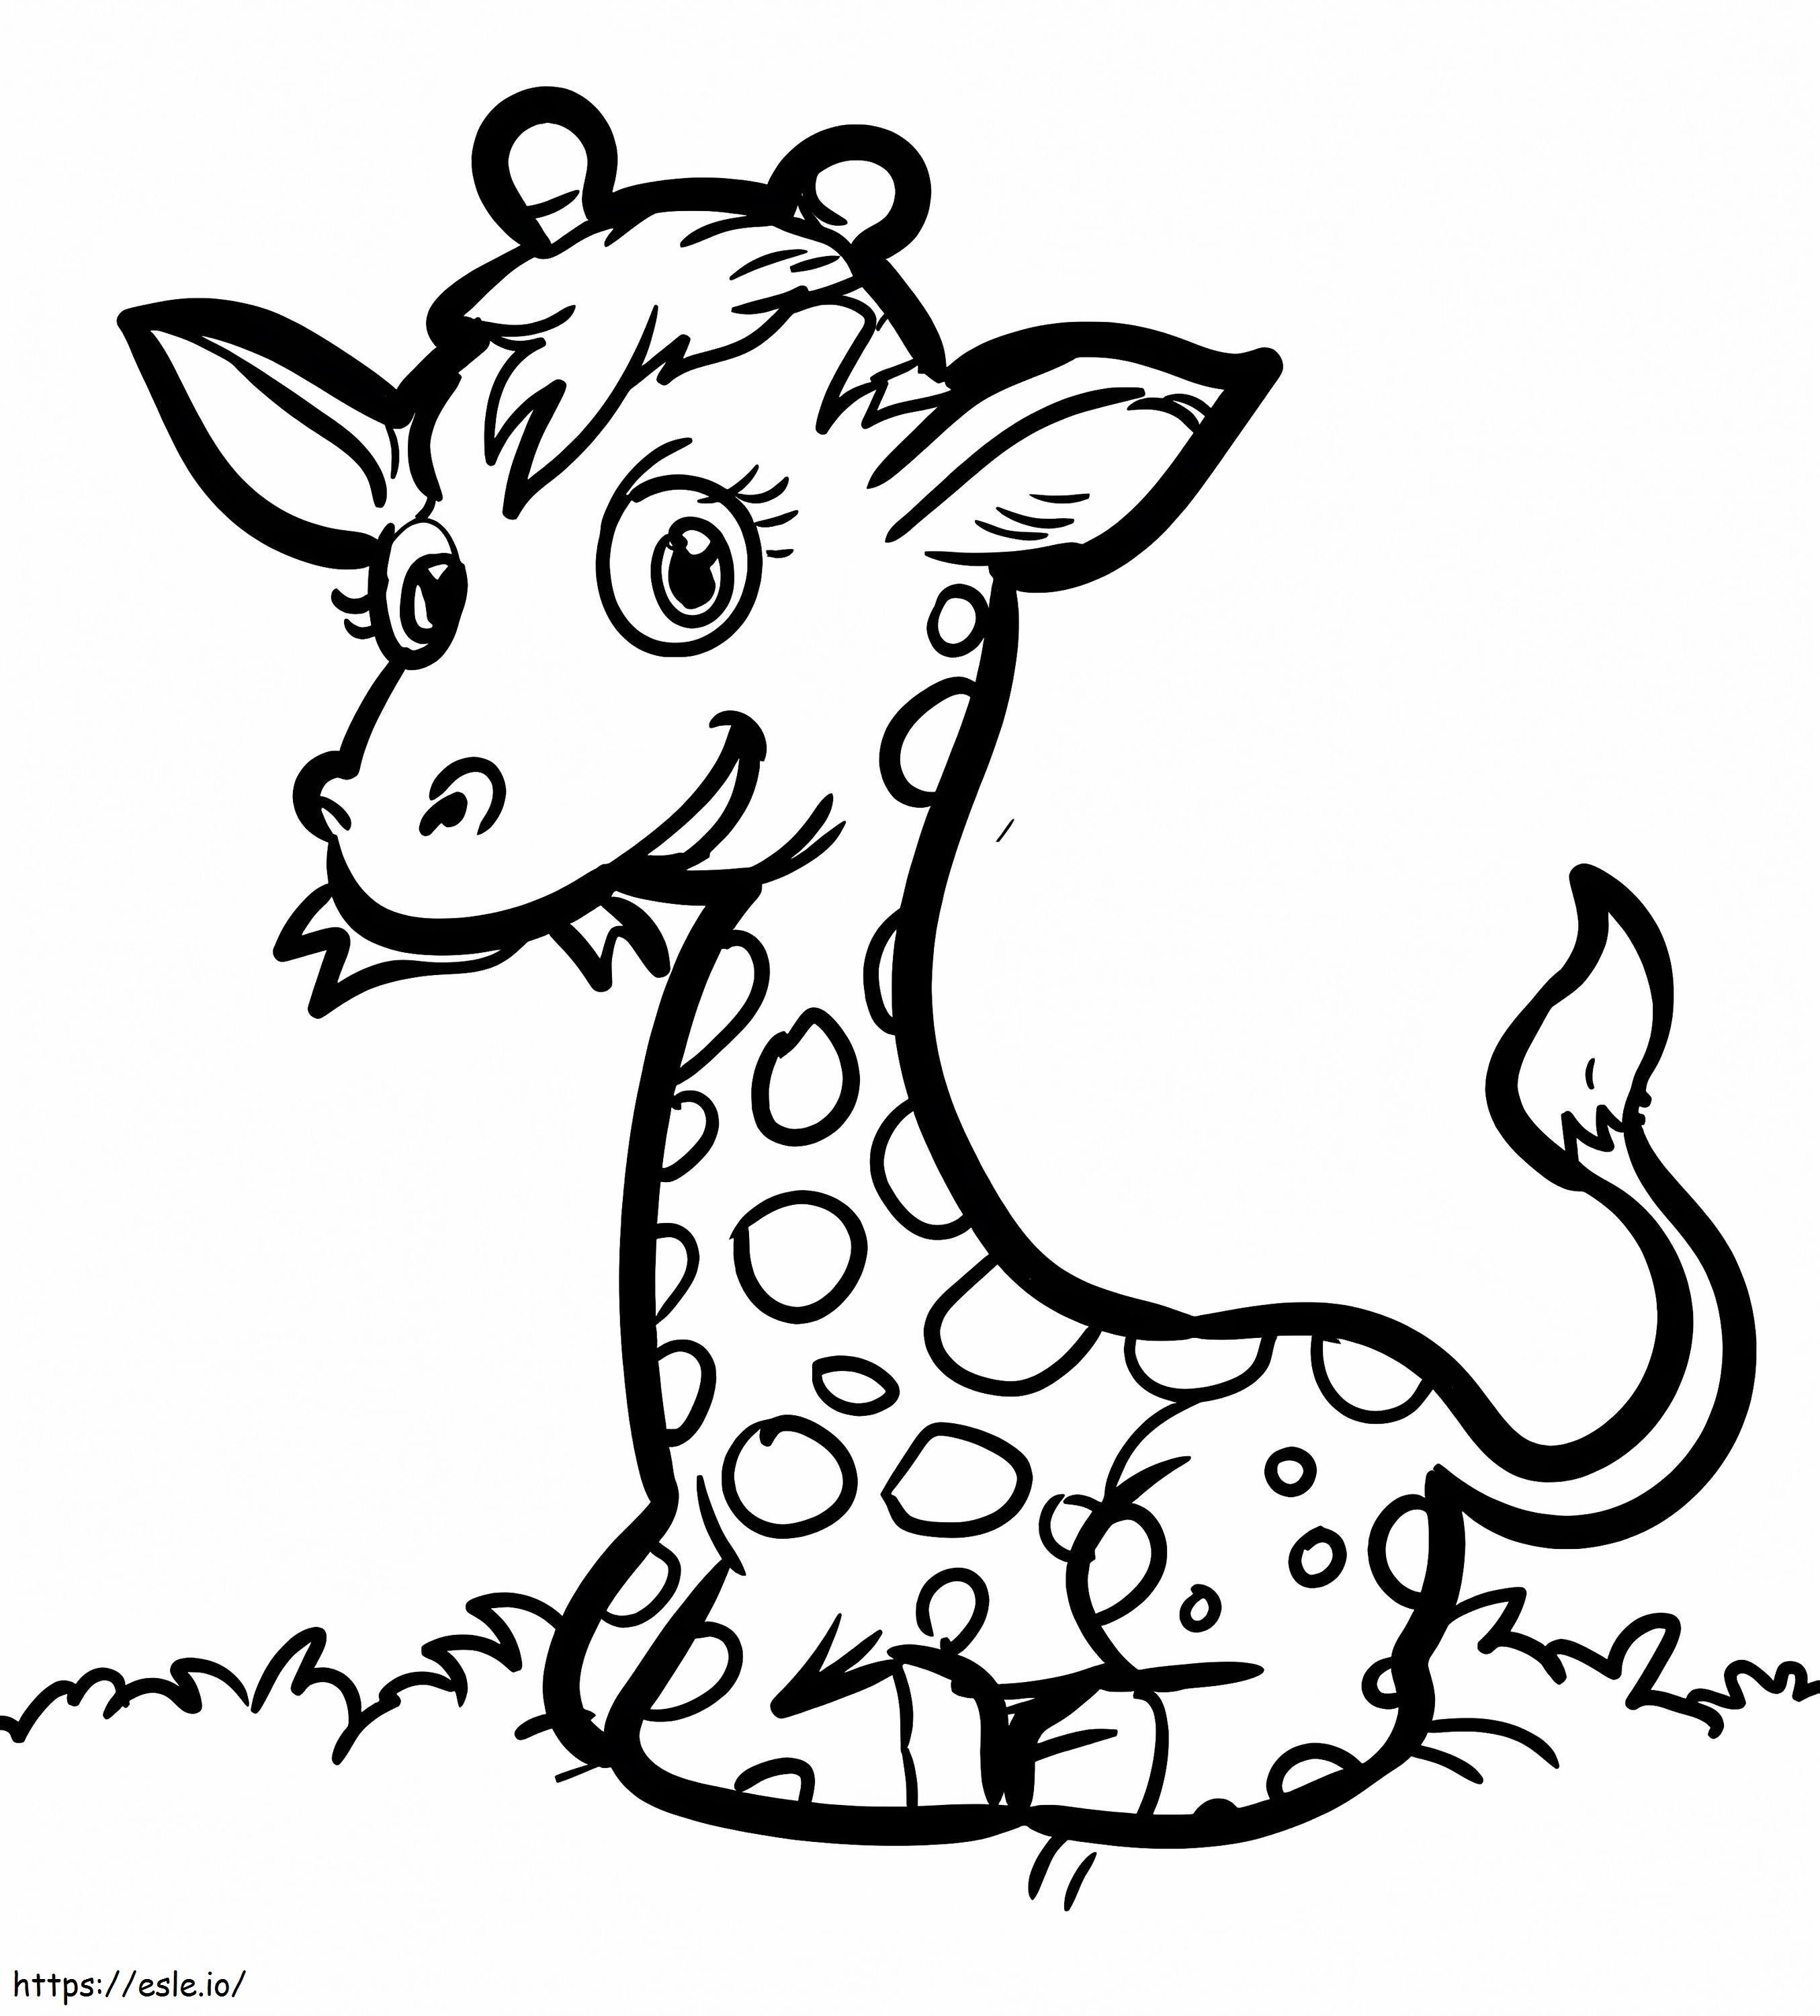 Adorable Giraffe coloring page